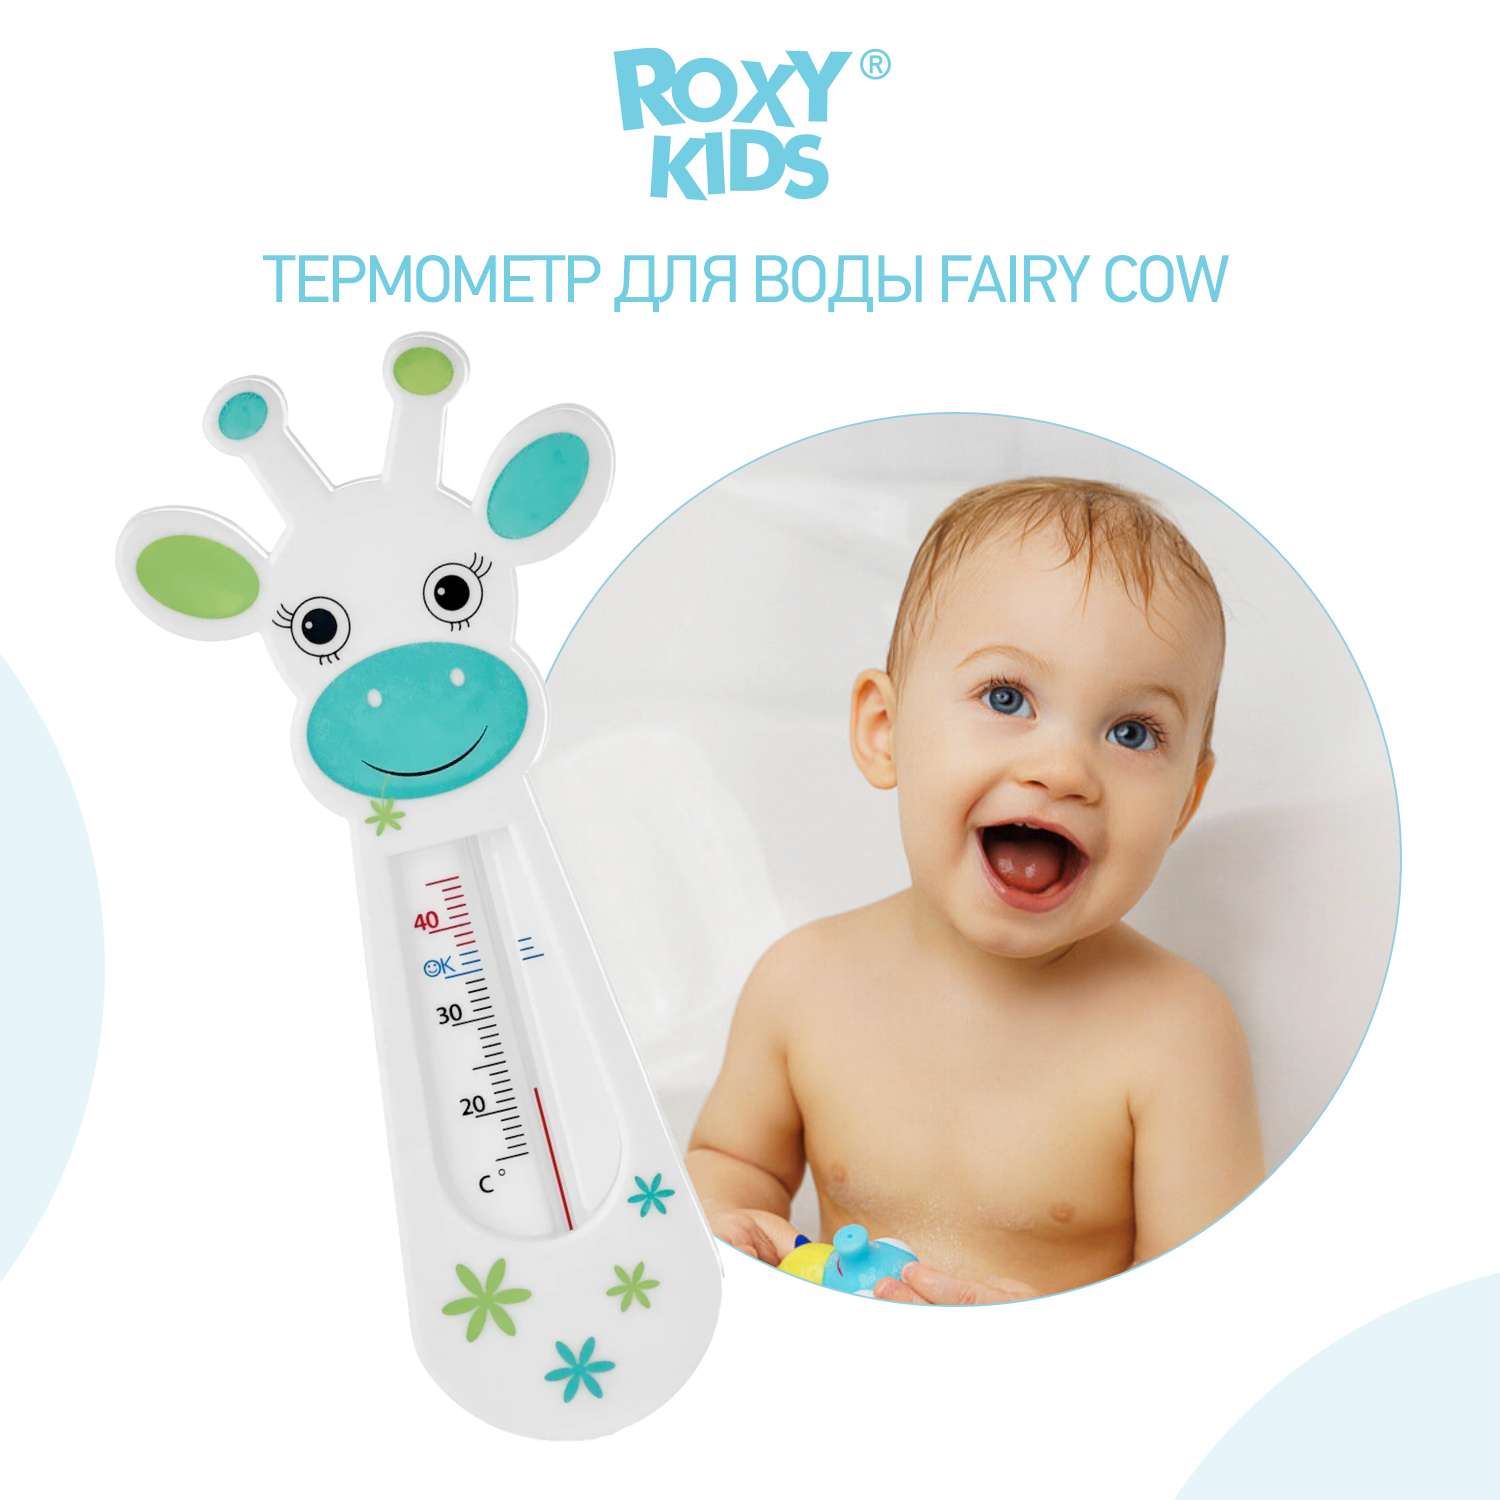 Термометр детский ROXY-KIDS Fairy Cow для купания в ванночке - фото 1